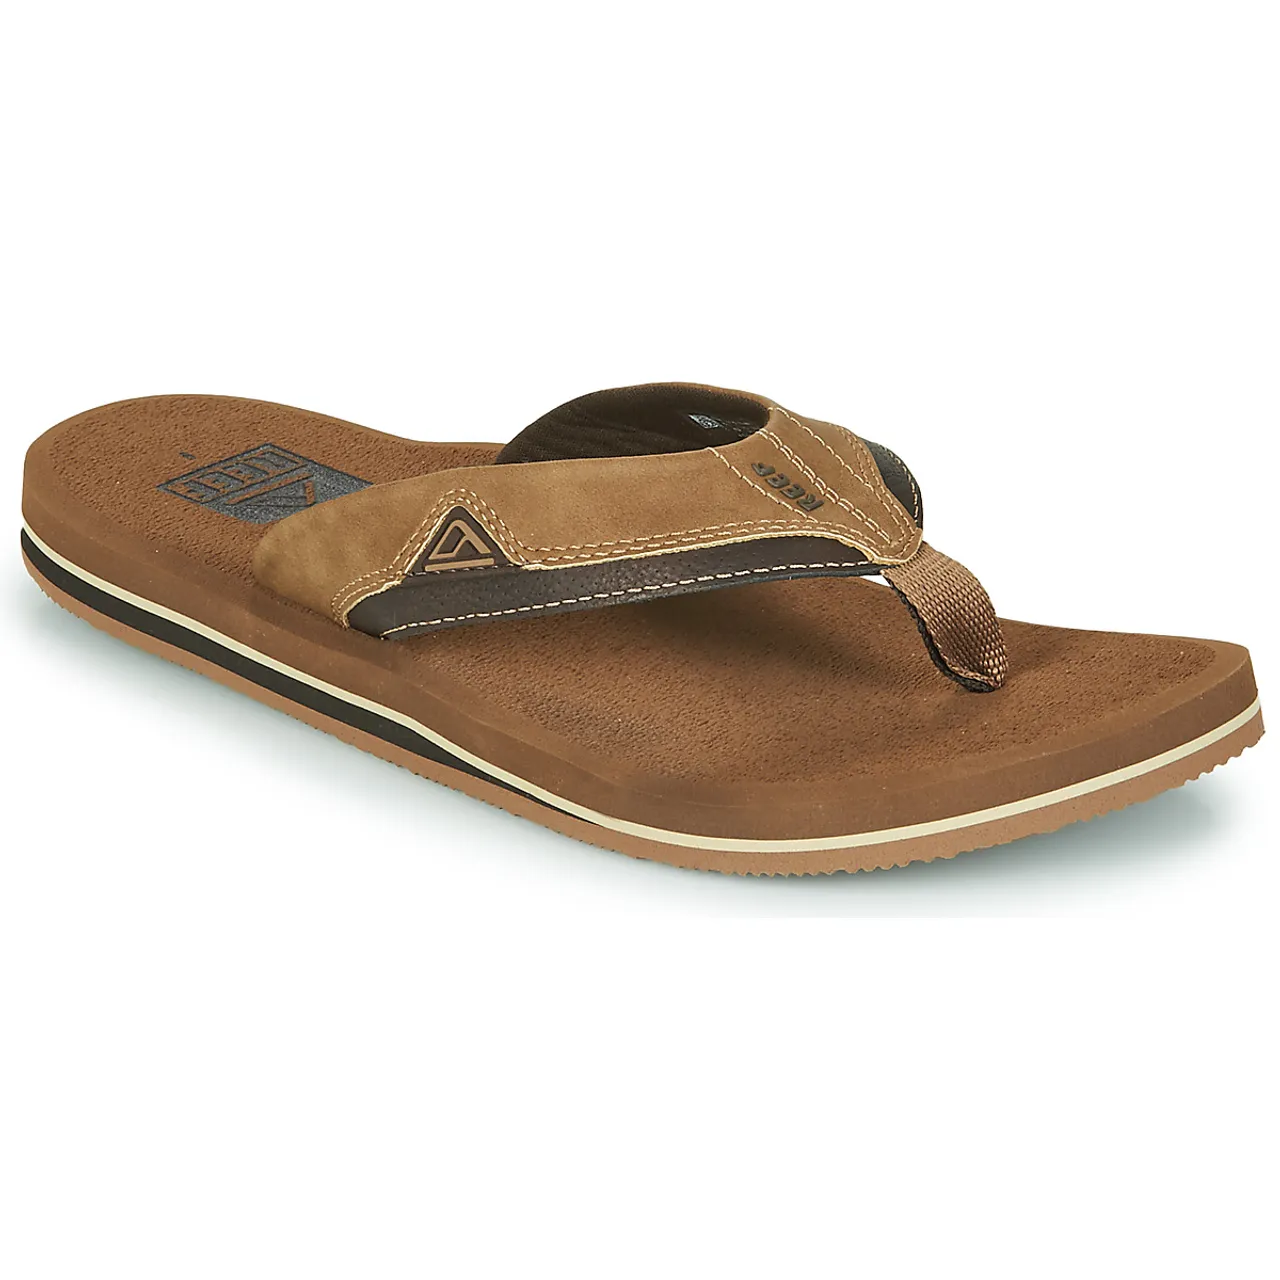 Reef  CUSHION DAWN  men's Flip flops / Sandals (Shoes) in Brown